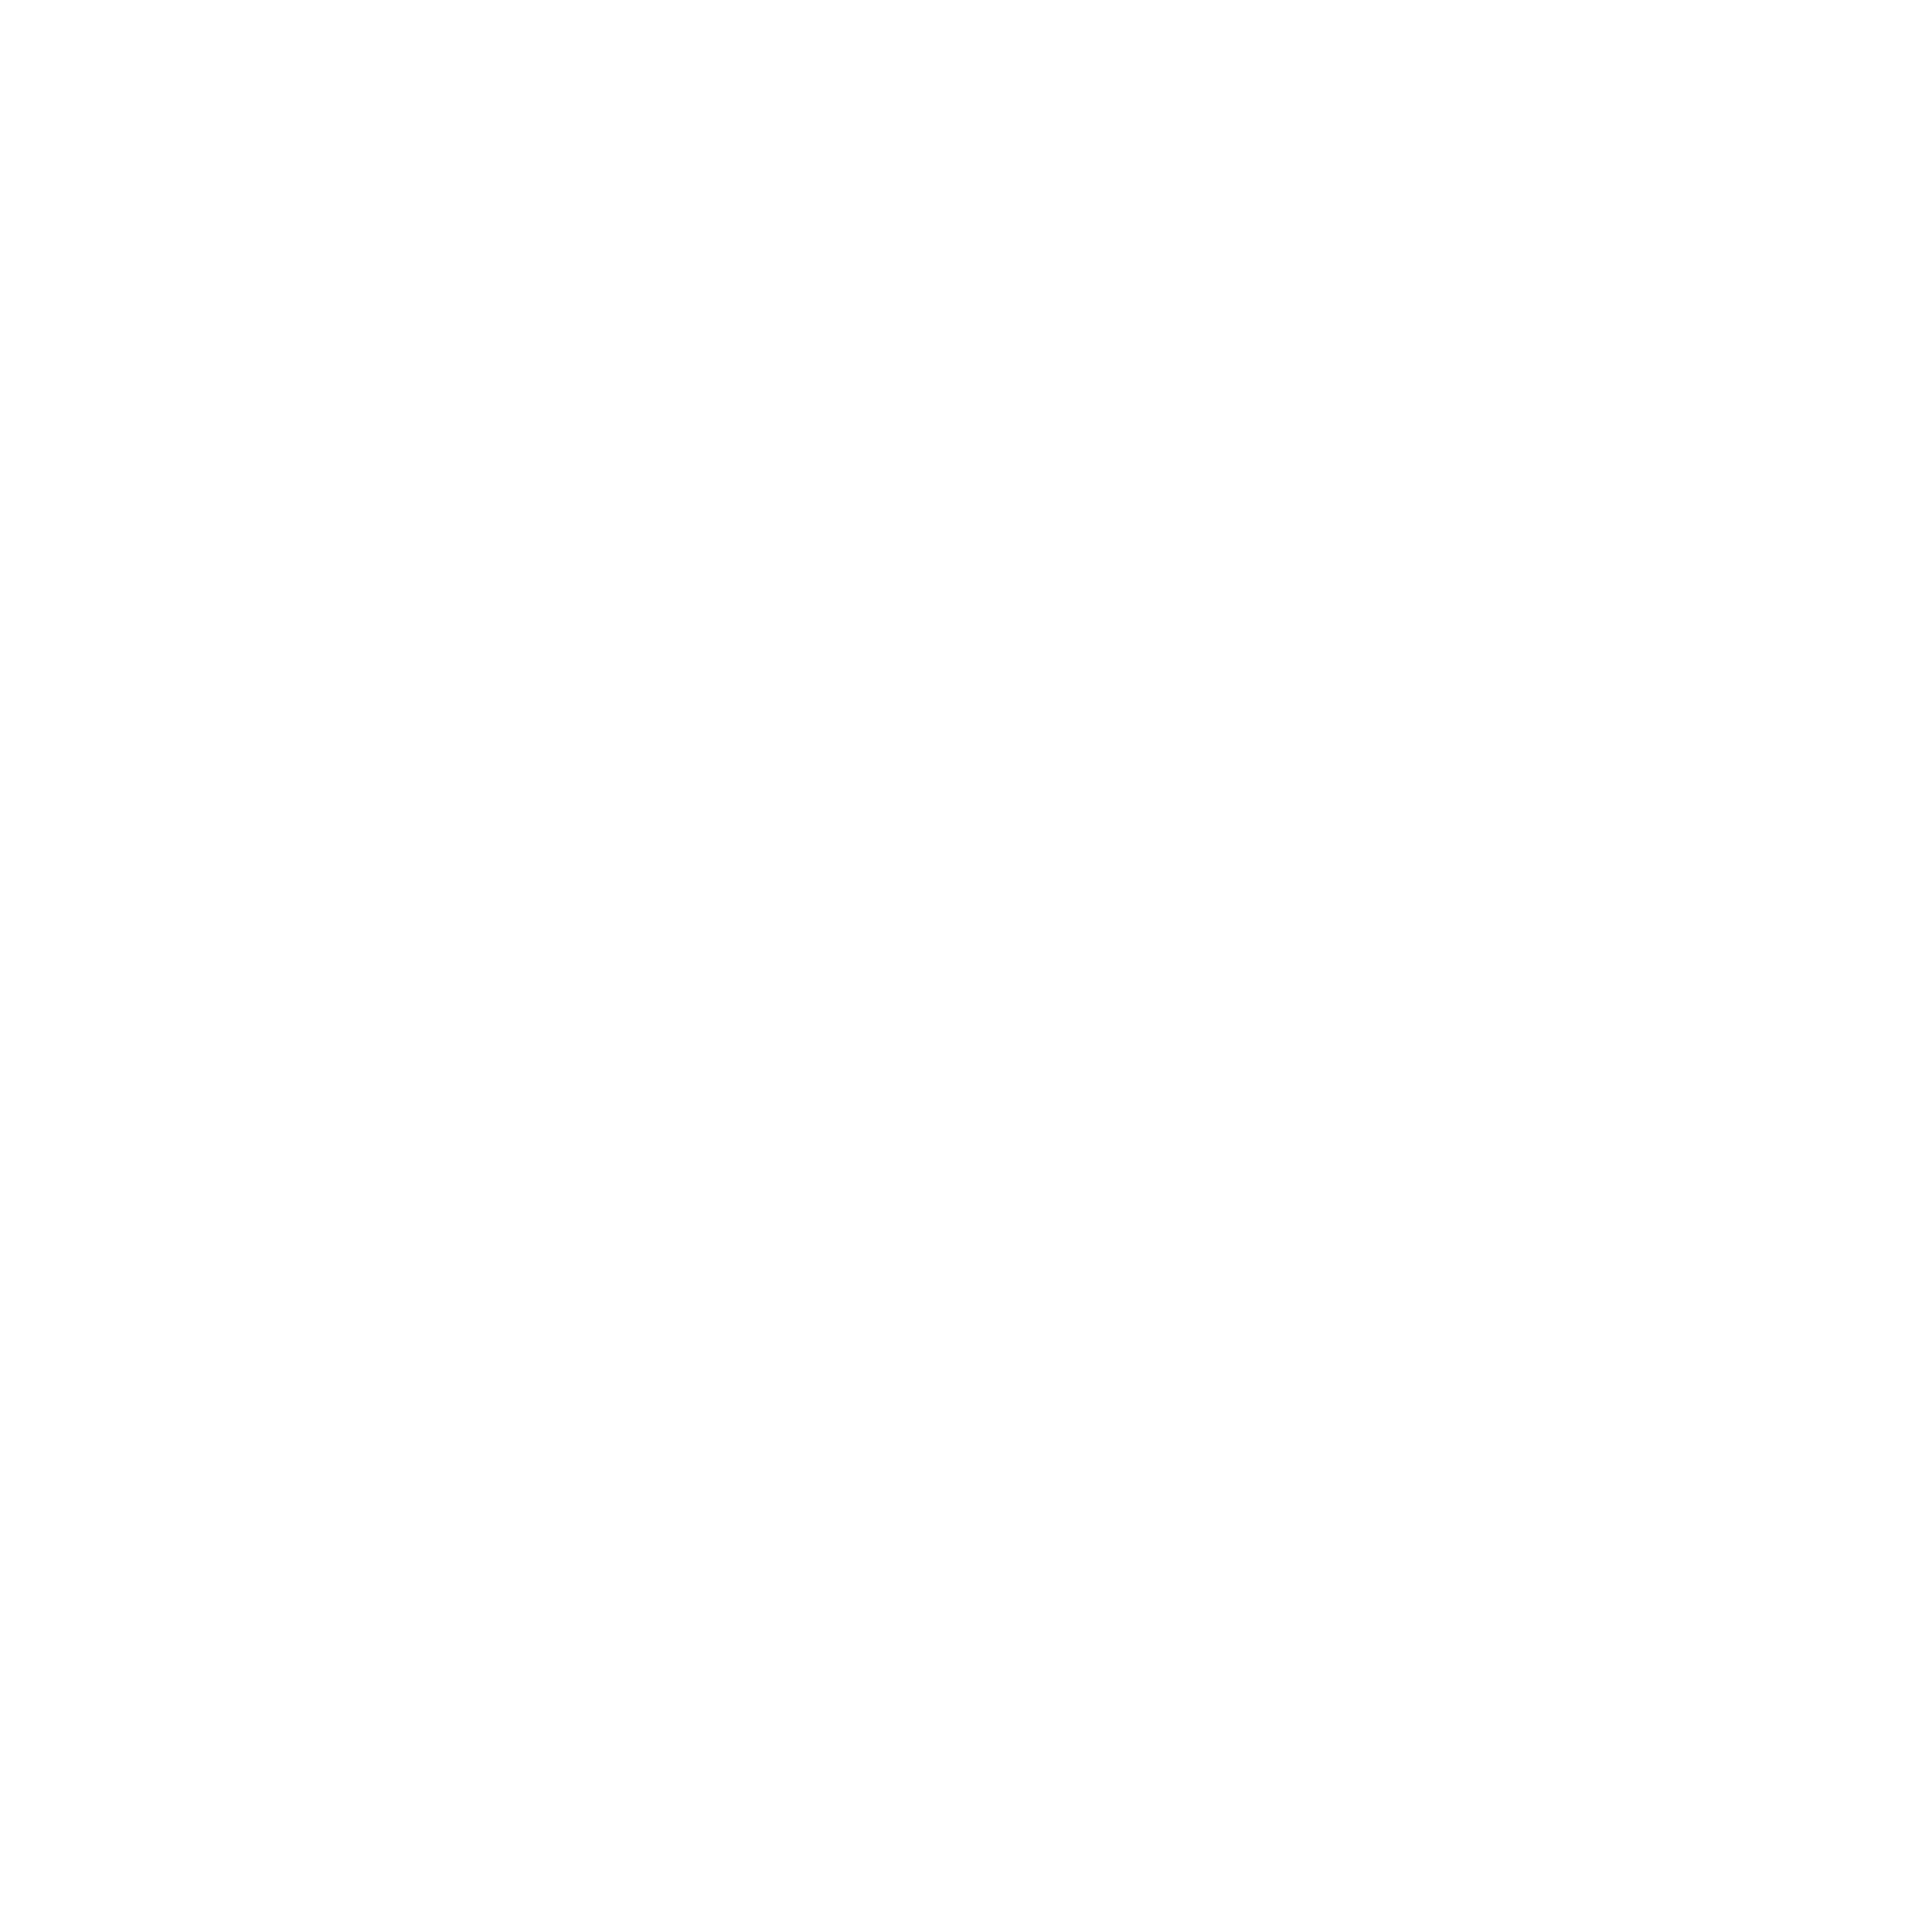 Teatro RioMar Recife